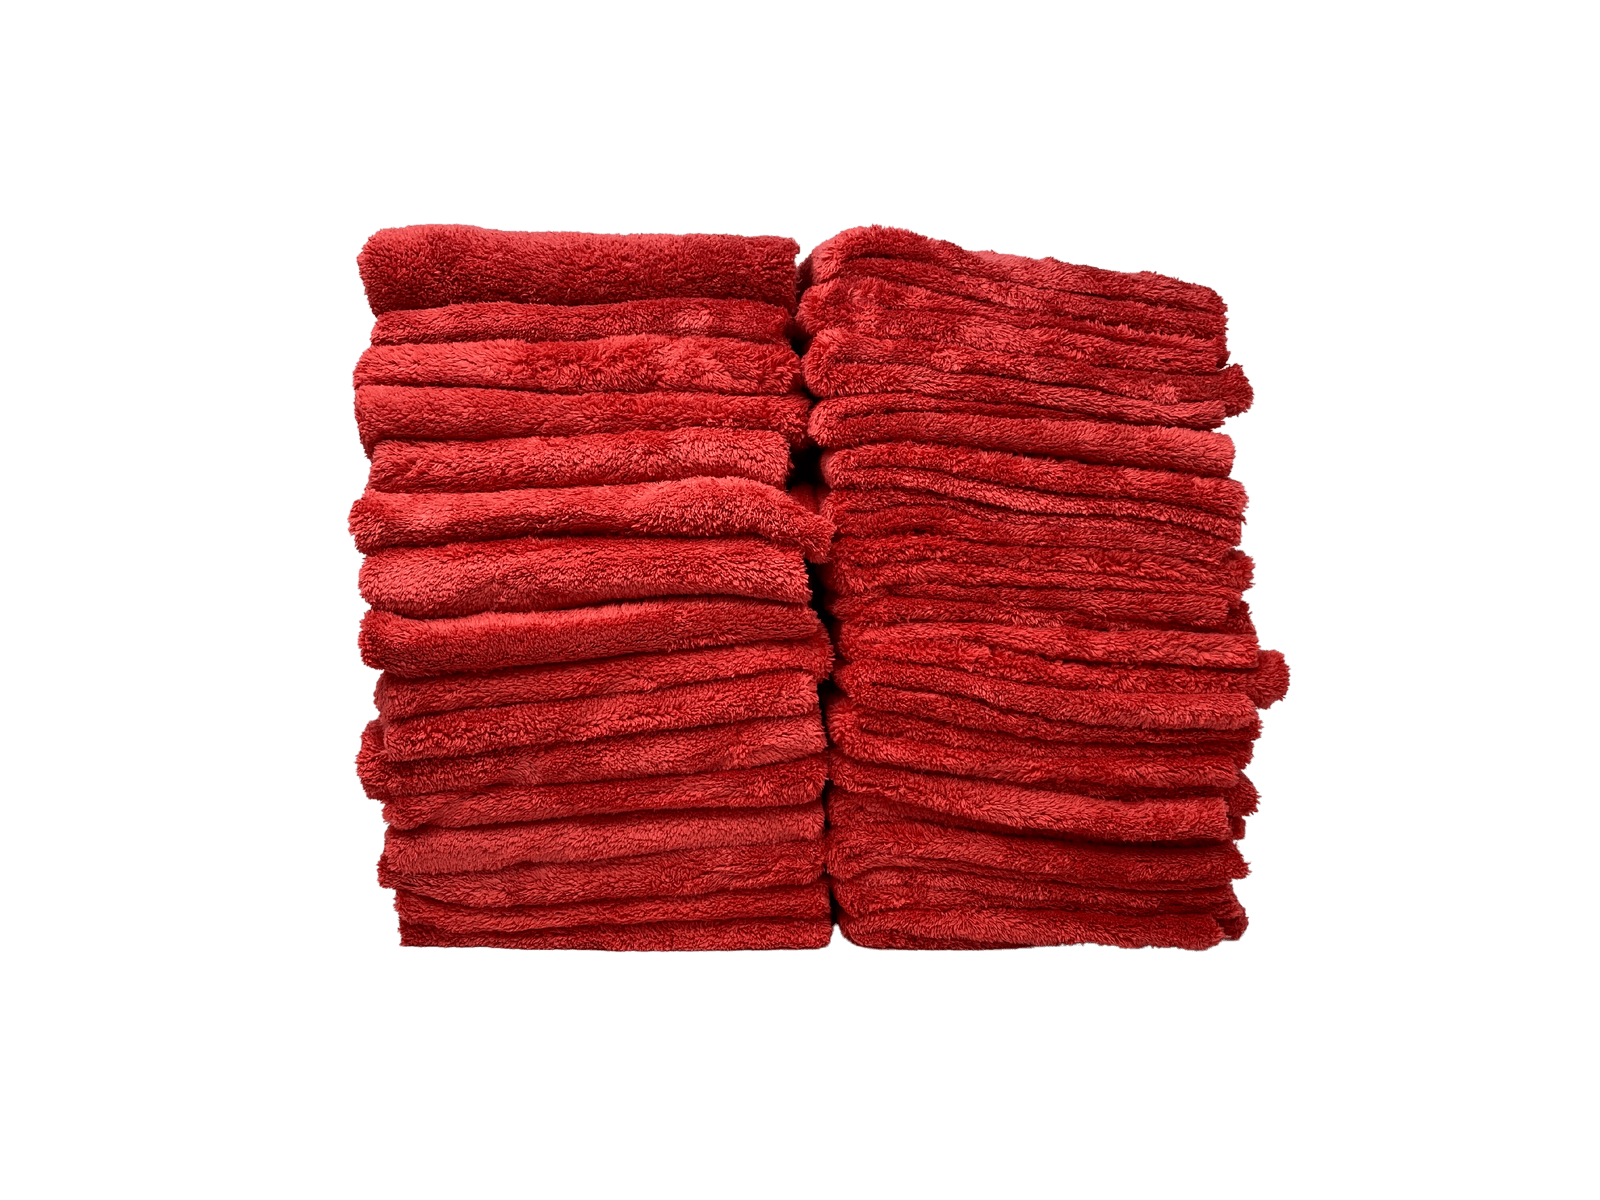 Edgeless Microfibre Towel Car Microfiber Cloth Polishing Drying